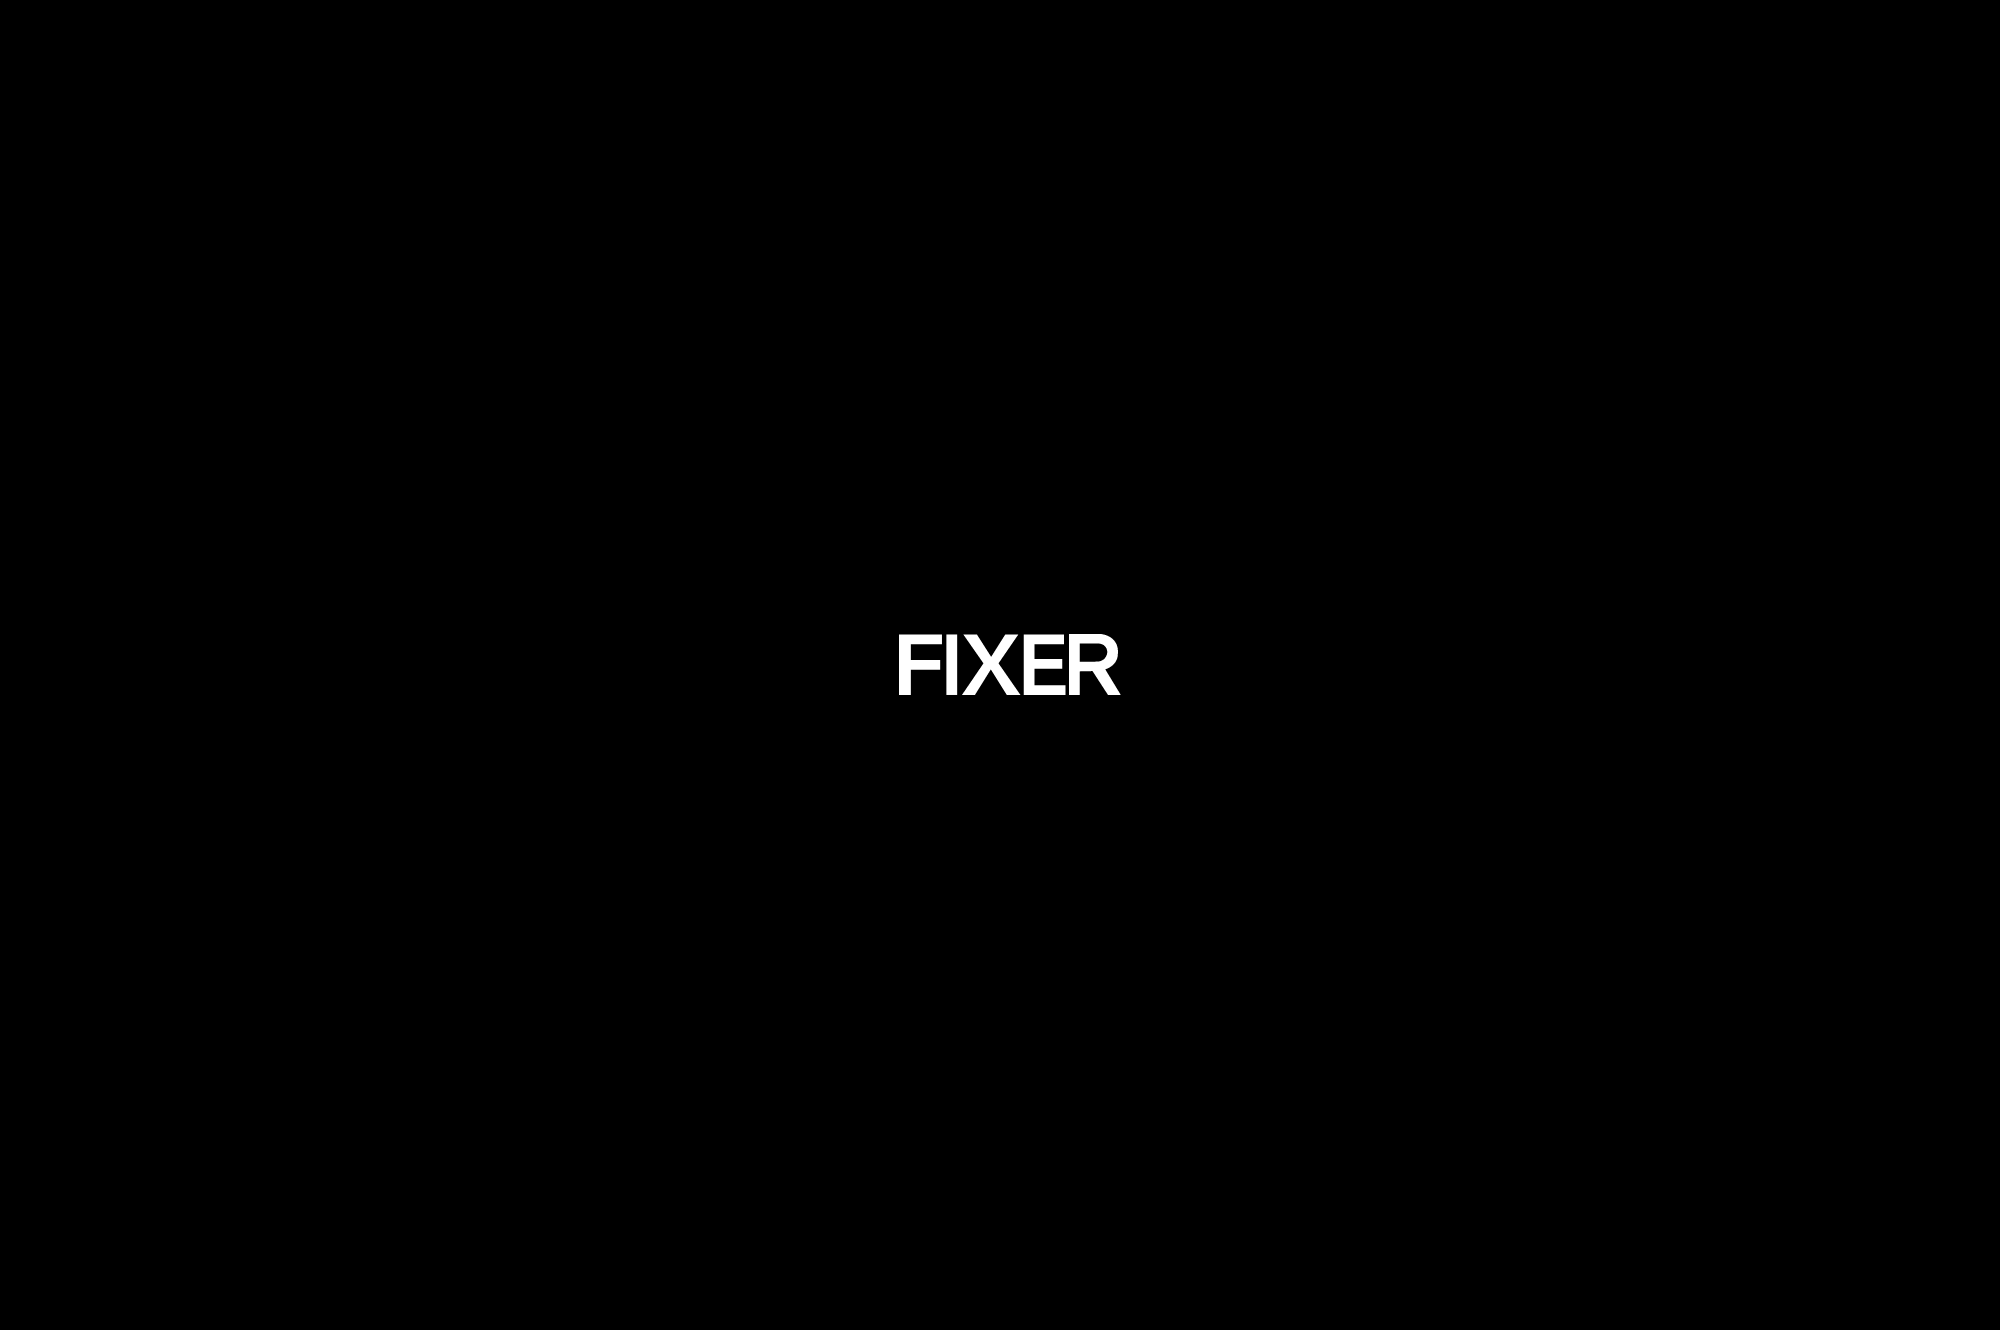 https://fixer-official.com/ FIXER フィクサー フィクサーオフィシャル カウントダウン 【FIXER / フィクサー・受注会開催 @東京 / 2022.12.10(sat) 12:00～】【F1,F2,F3,F4,TOMBOY,BLACK PANTHER,FTS,FPK,ILLUMINATI EYES RING,PATHER RING,ILLUMINATI EYES NECKLACE,COMPASS & RULER NECKLACE,FWC】愛知 名古屋 Alto e Diritto altoediritto アルトエデリット ダブルライダース シングルライダース レザーテーラード トムボーイ サングラス ブラックパンサー Tシャツ ハービー山口 パーカー ブレスレット ウォレット リバース 東京限定 イルミナティアイズリング ブラックパンサー ネックレス コンパスルーラーネックレス キーチェーン ウォレットチェーン フィクサーコーヒー